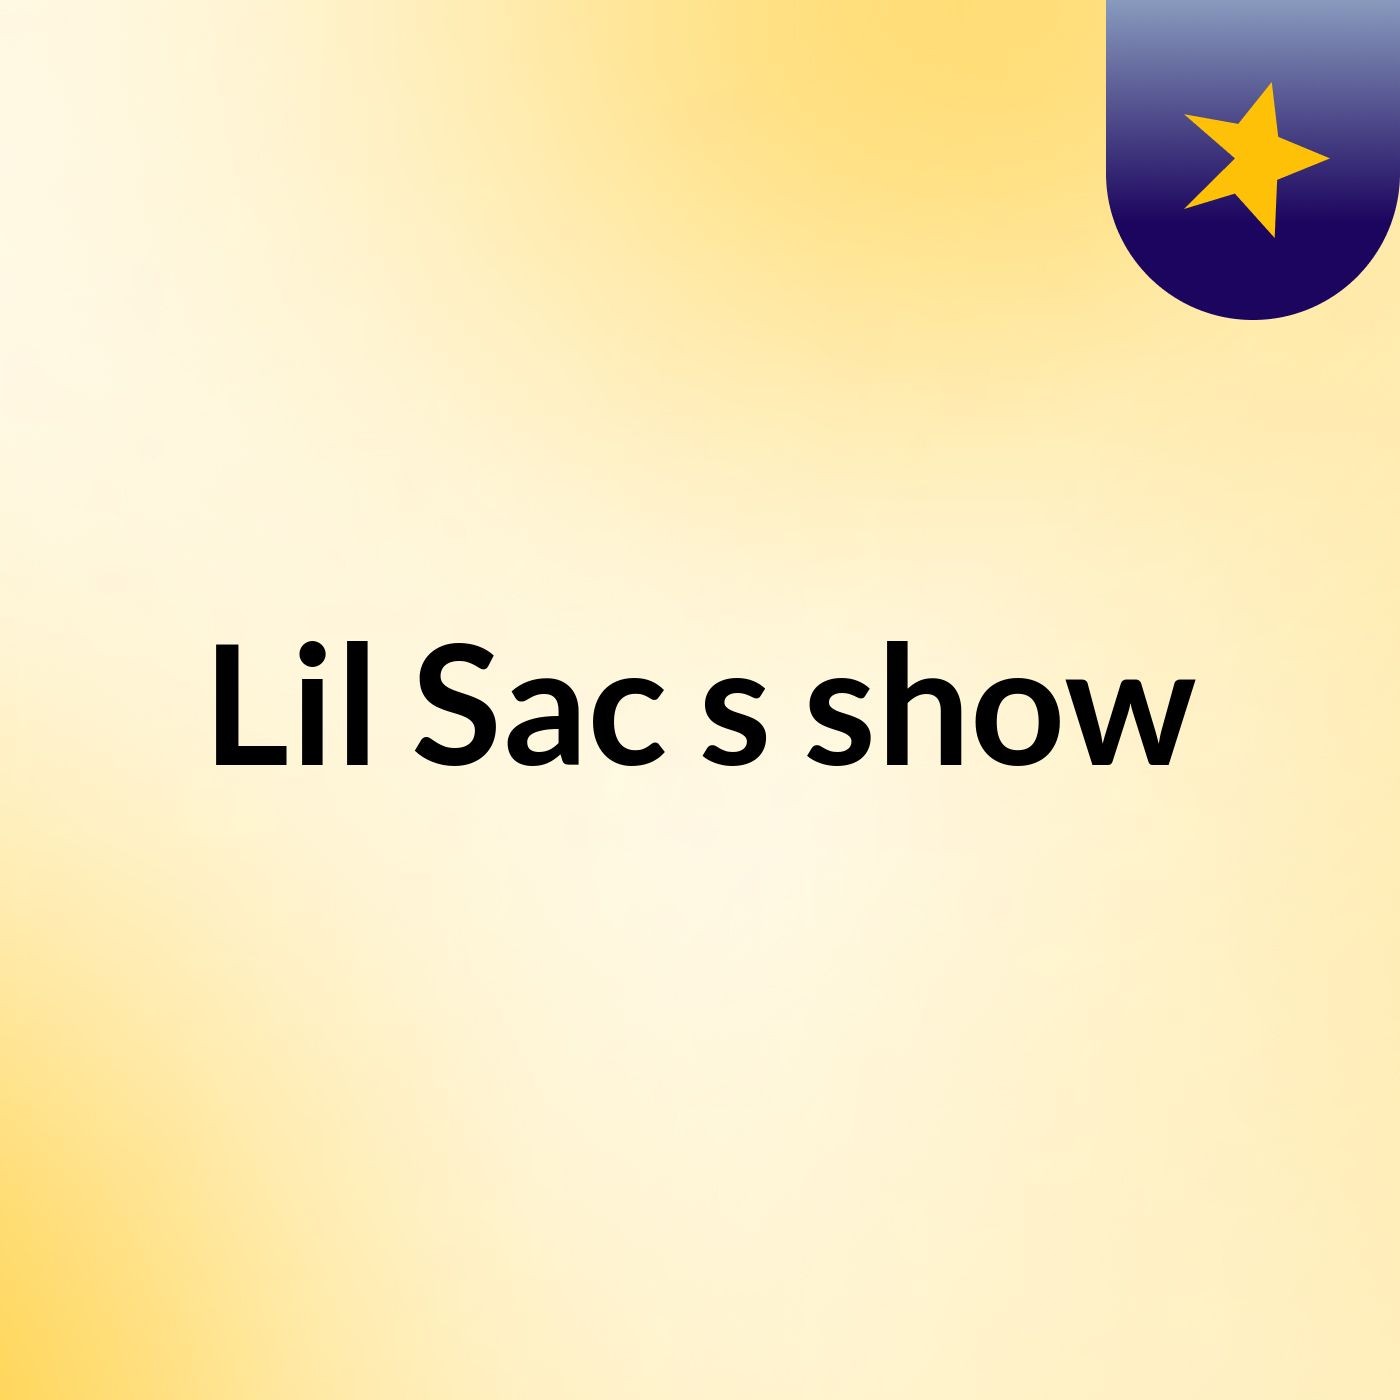 Lil Sac's show